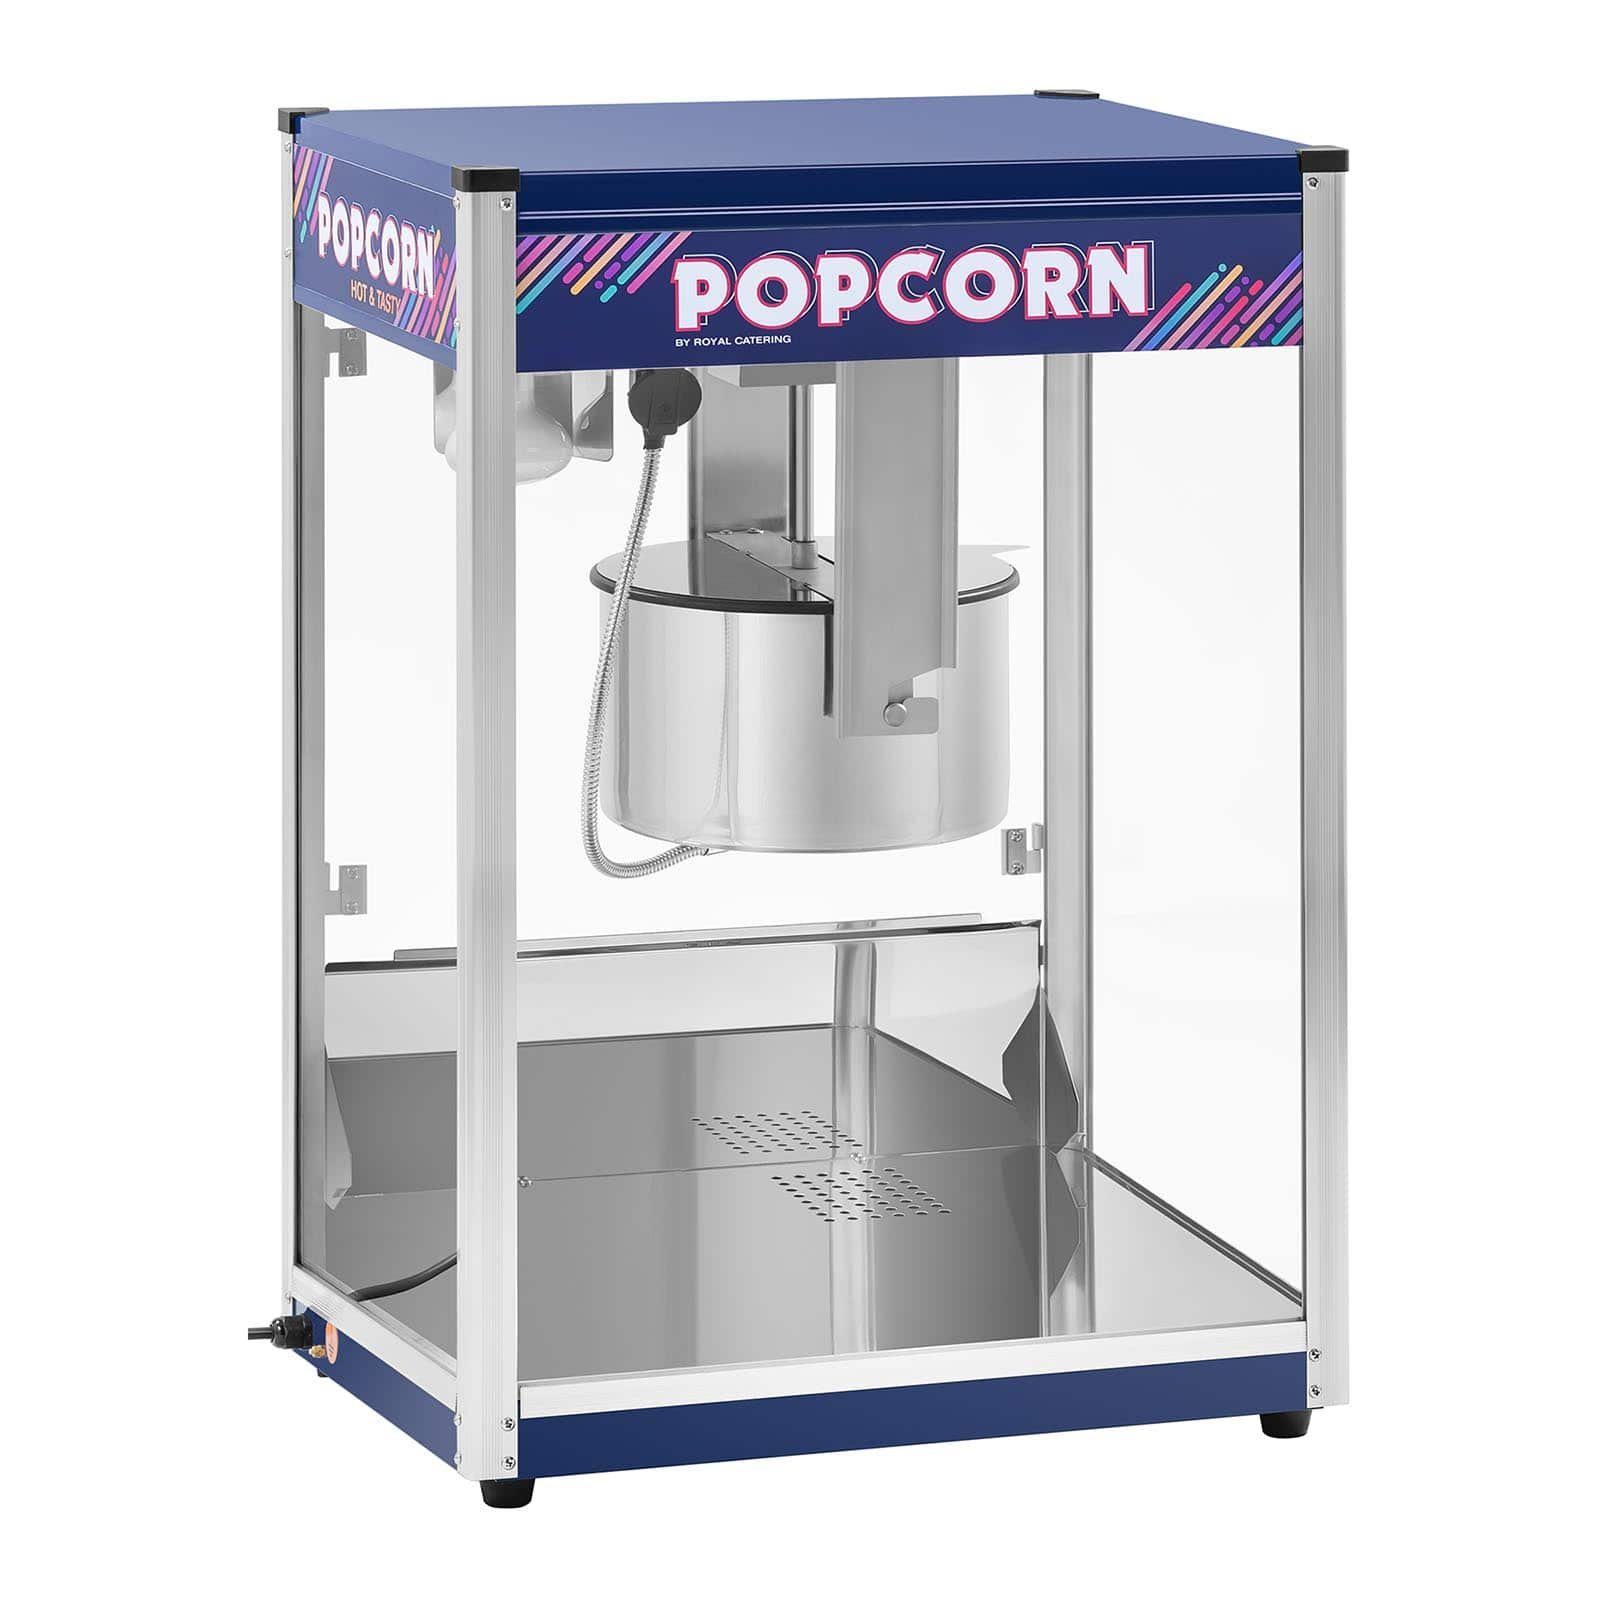 Maker Popcorn Popcornmaschine Royal Catering Maschine Popcornautomat Popcornmaker Popcornmaschine